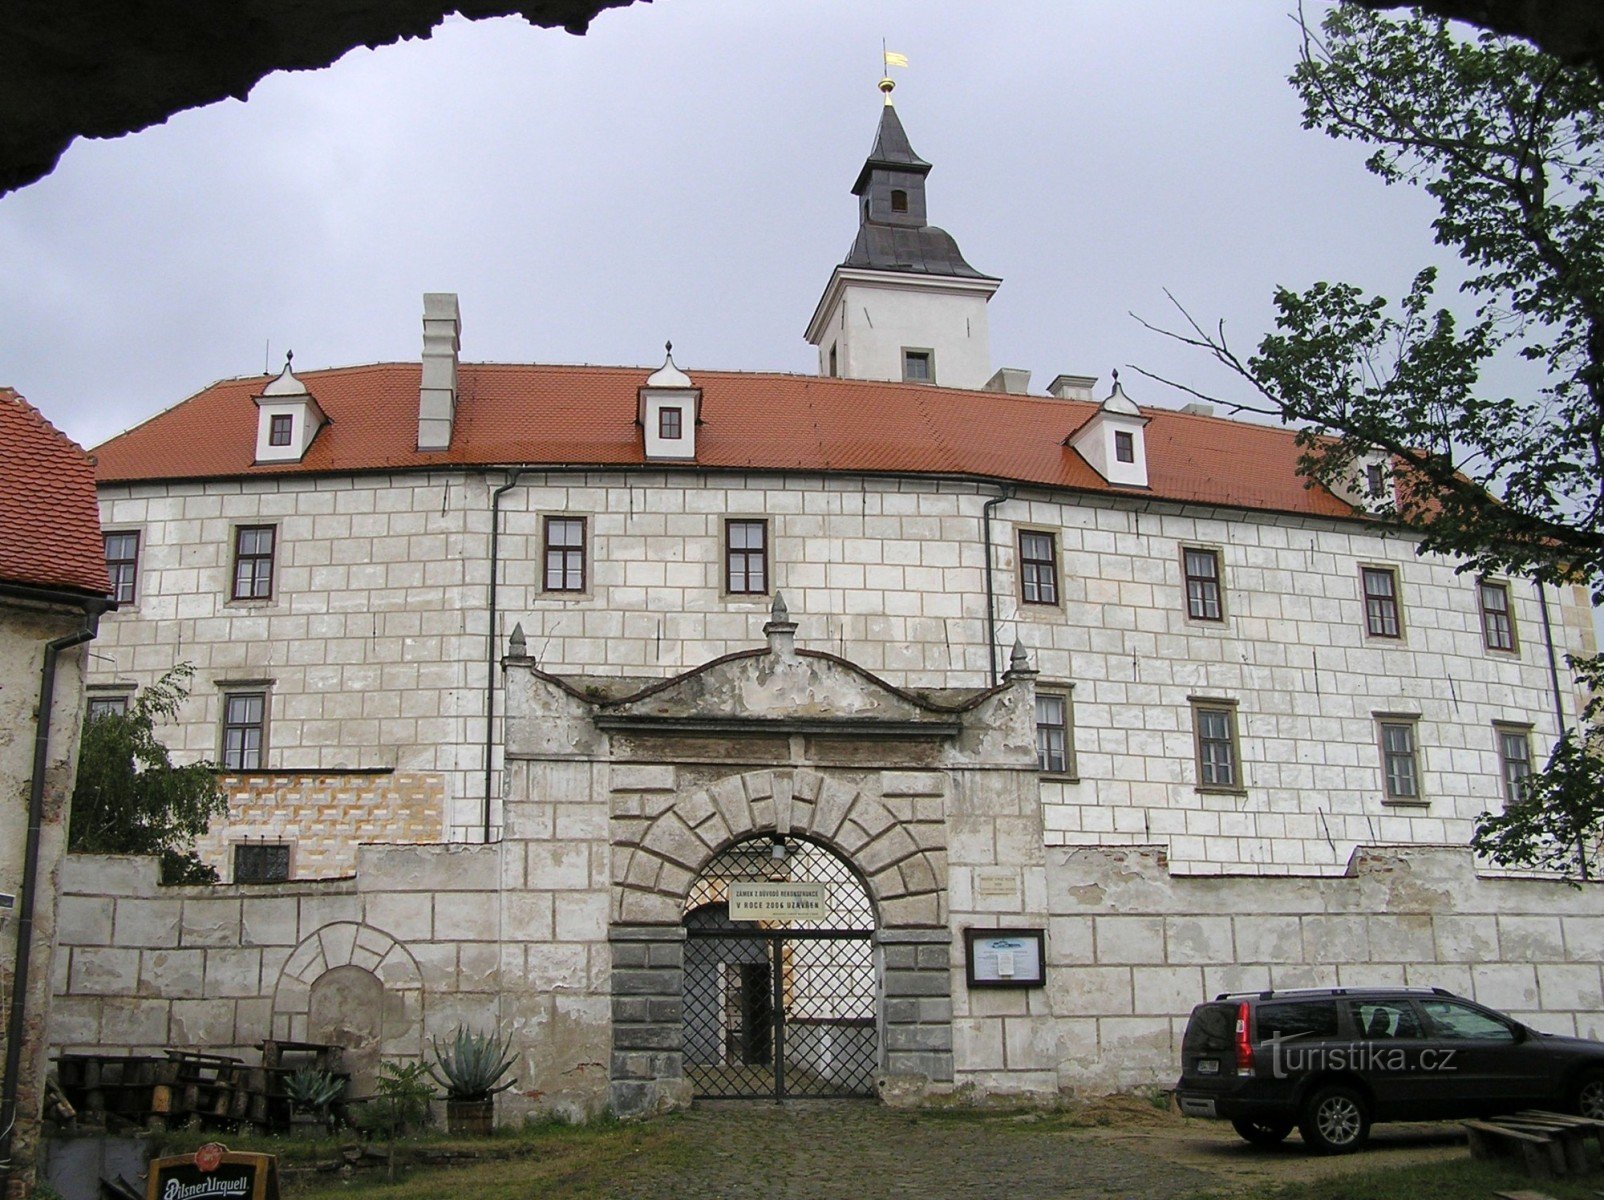 Jevišoice - Old Castle (second gate)